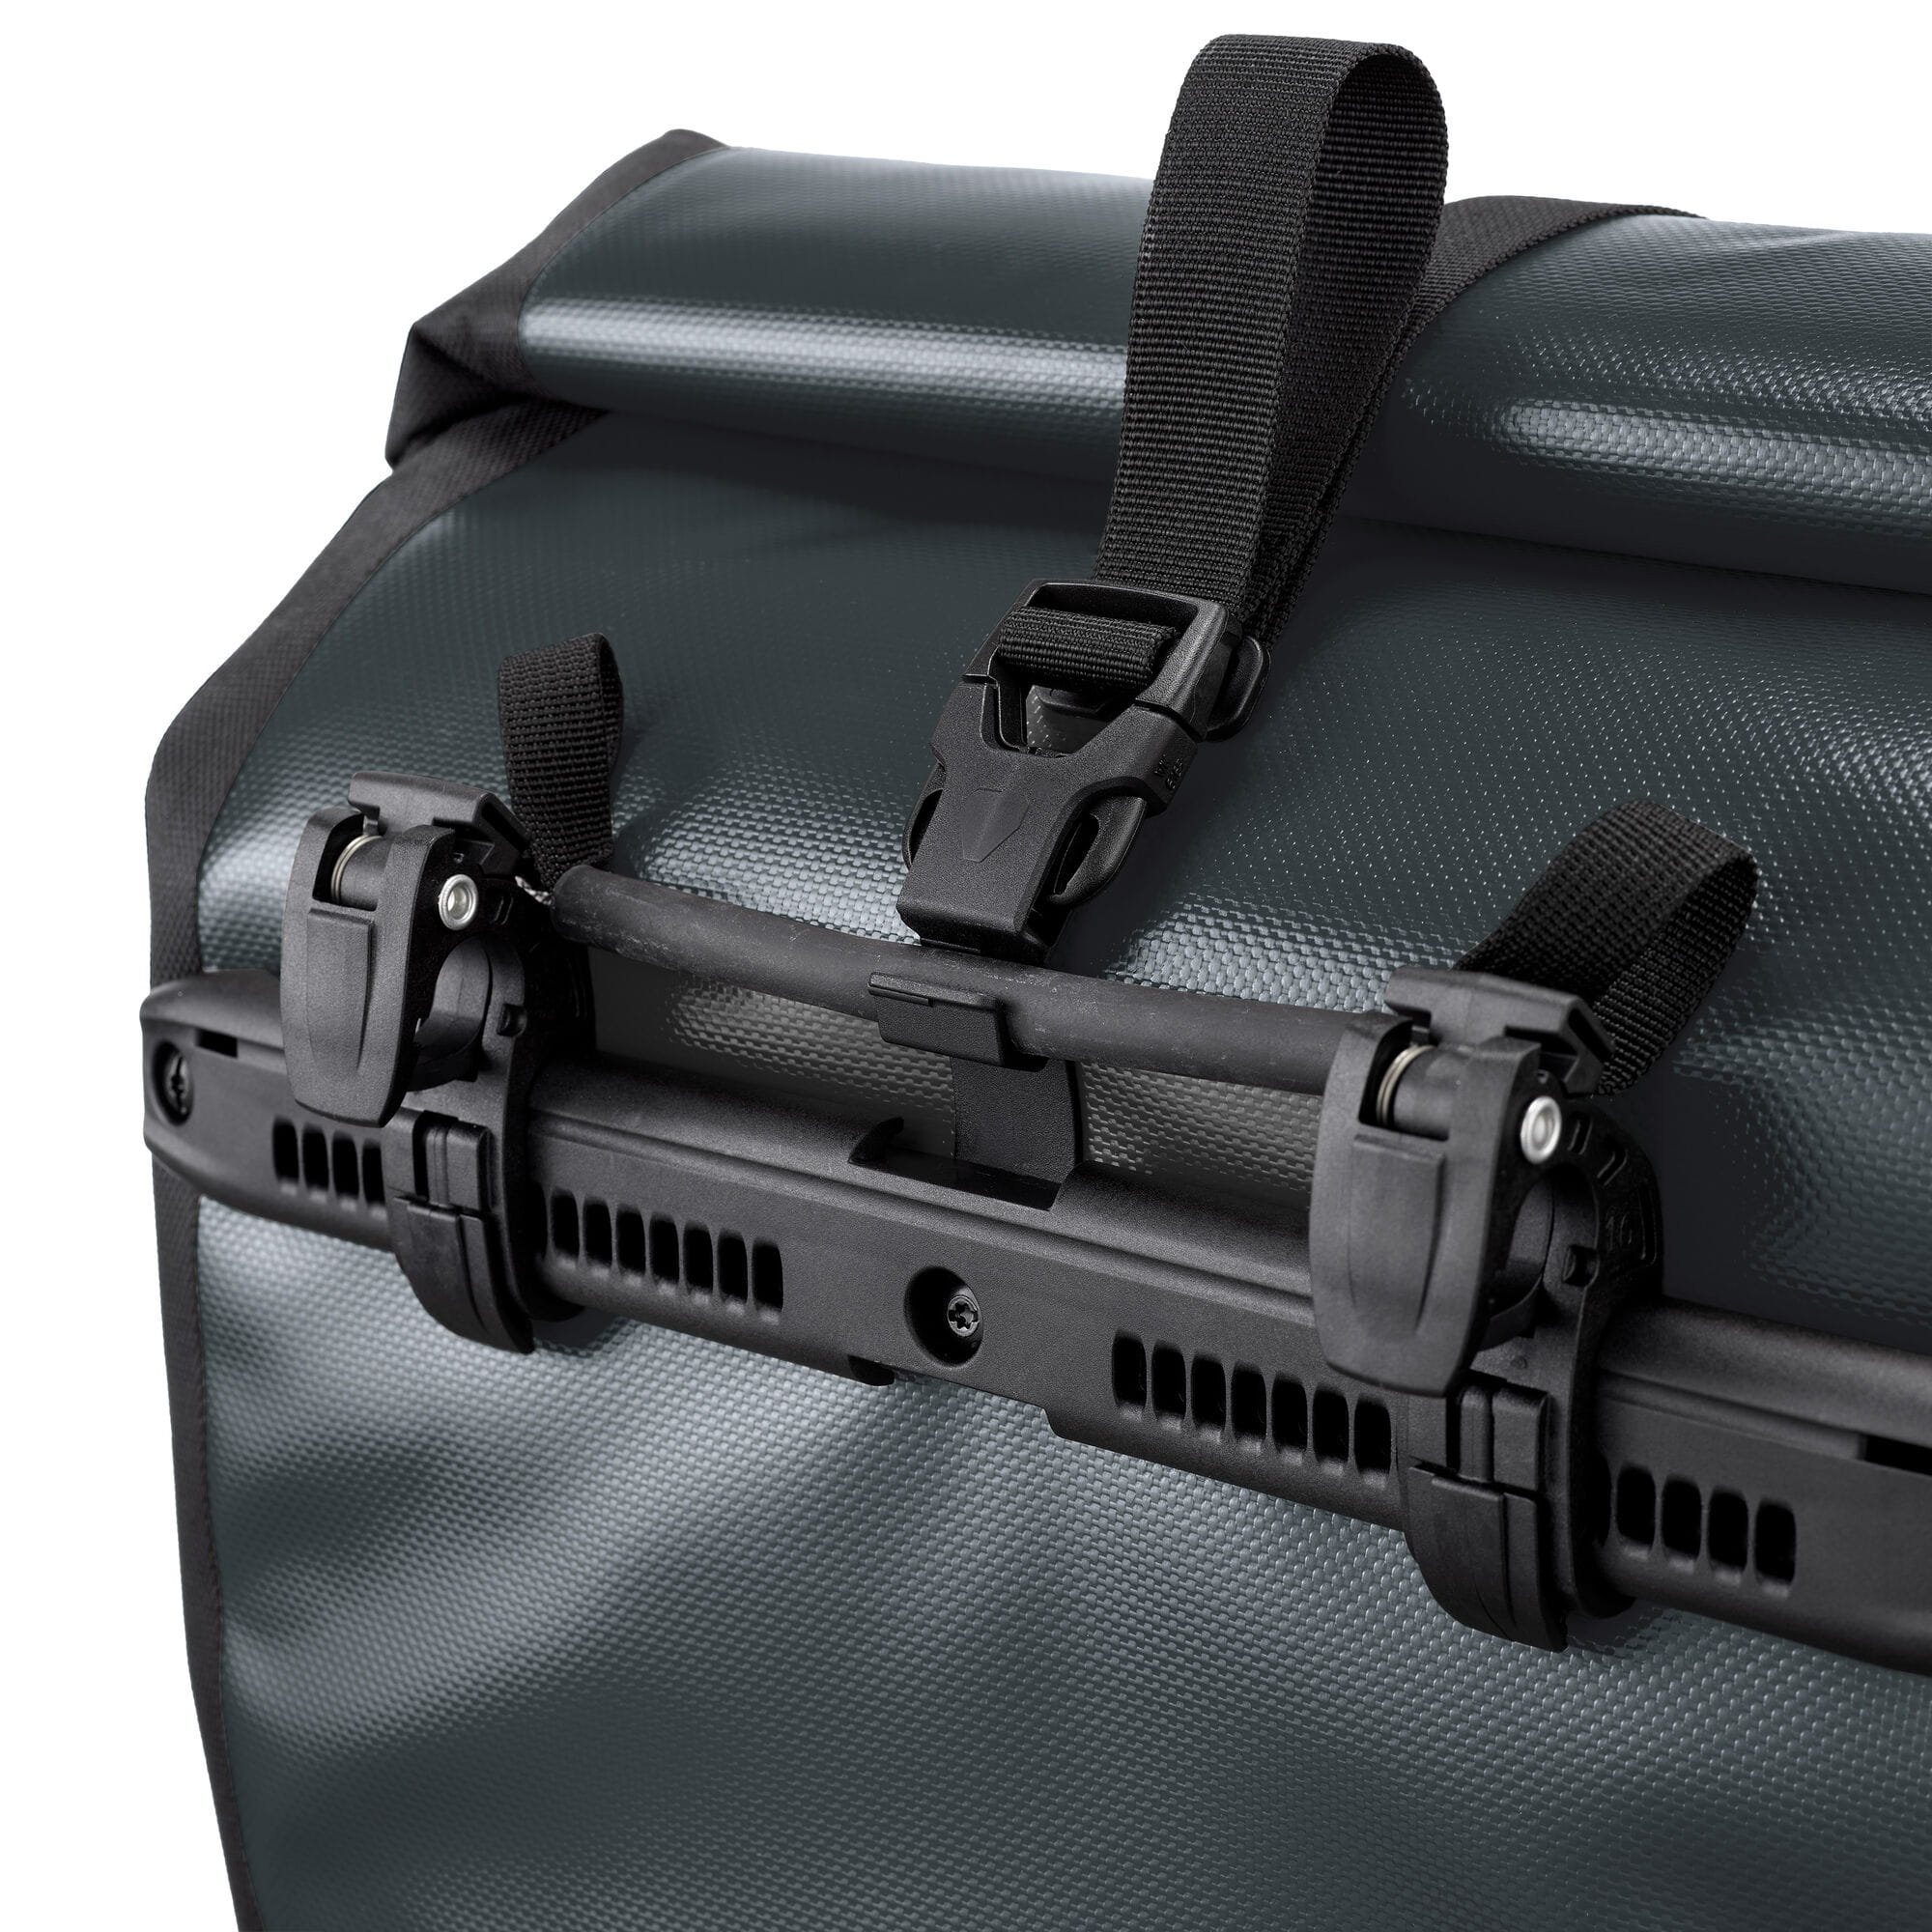 Ortlieb Back-Roller Rear Pannier Bags Pair